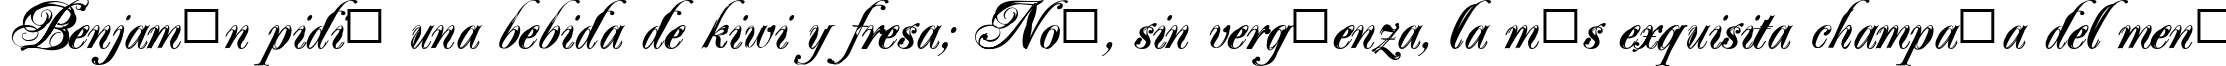 Пример написания шрифтом Majestic X текста на испанском